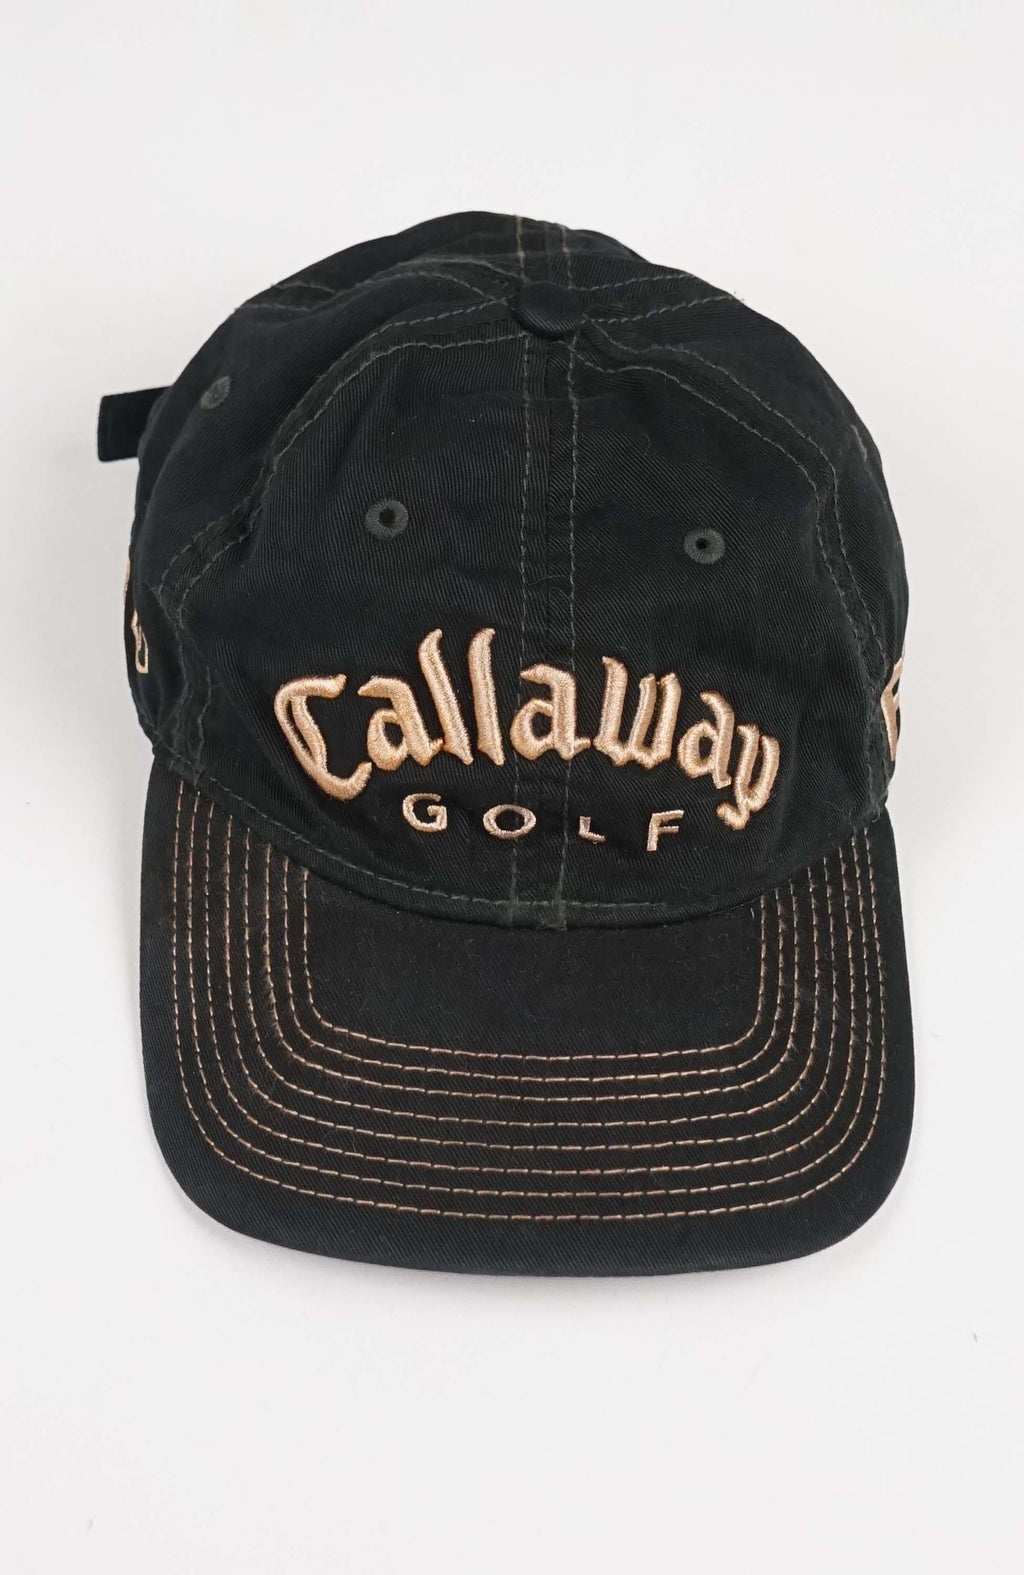 VINTAGE CALLAWAY GOLF HAT 